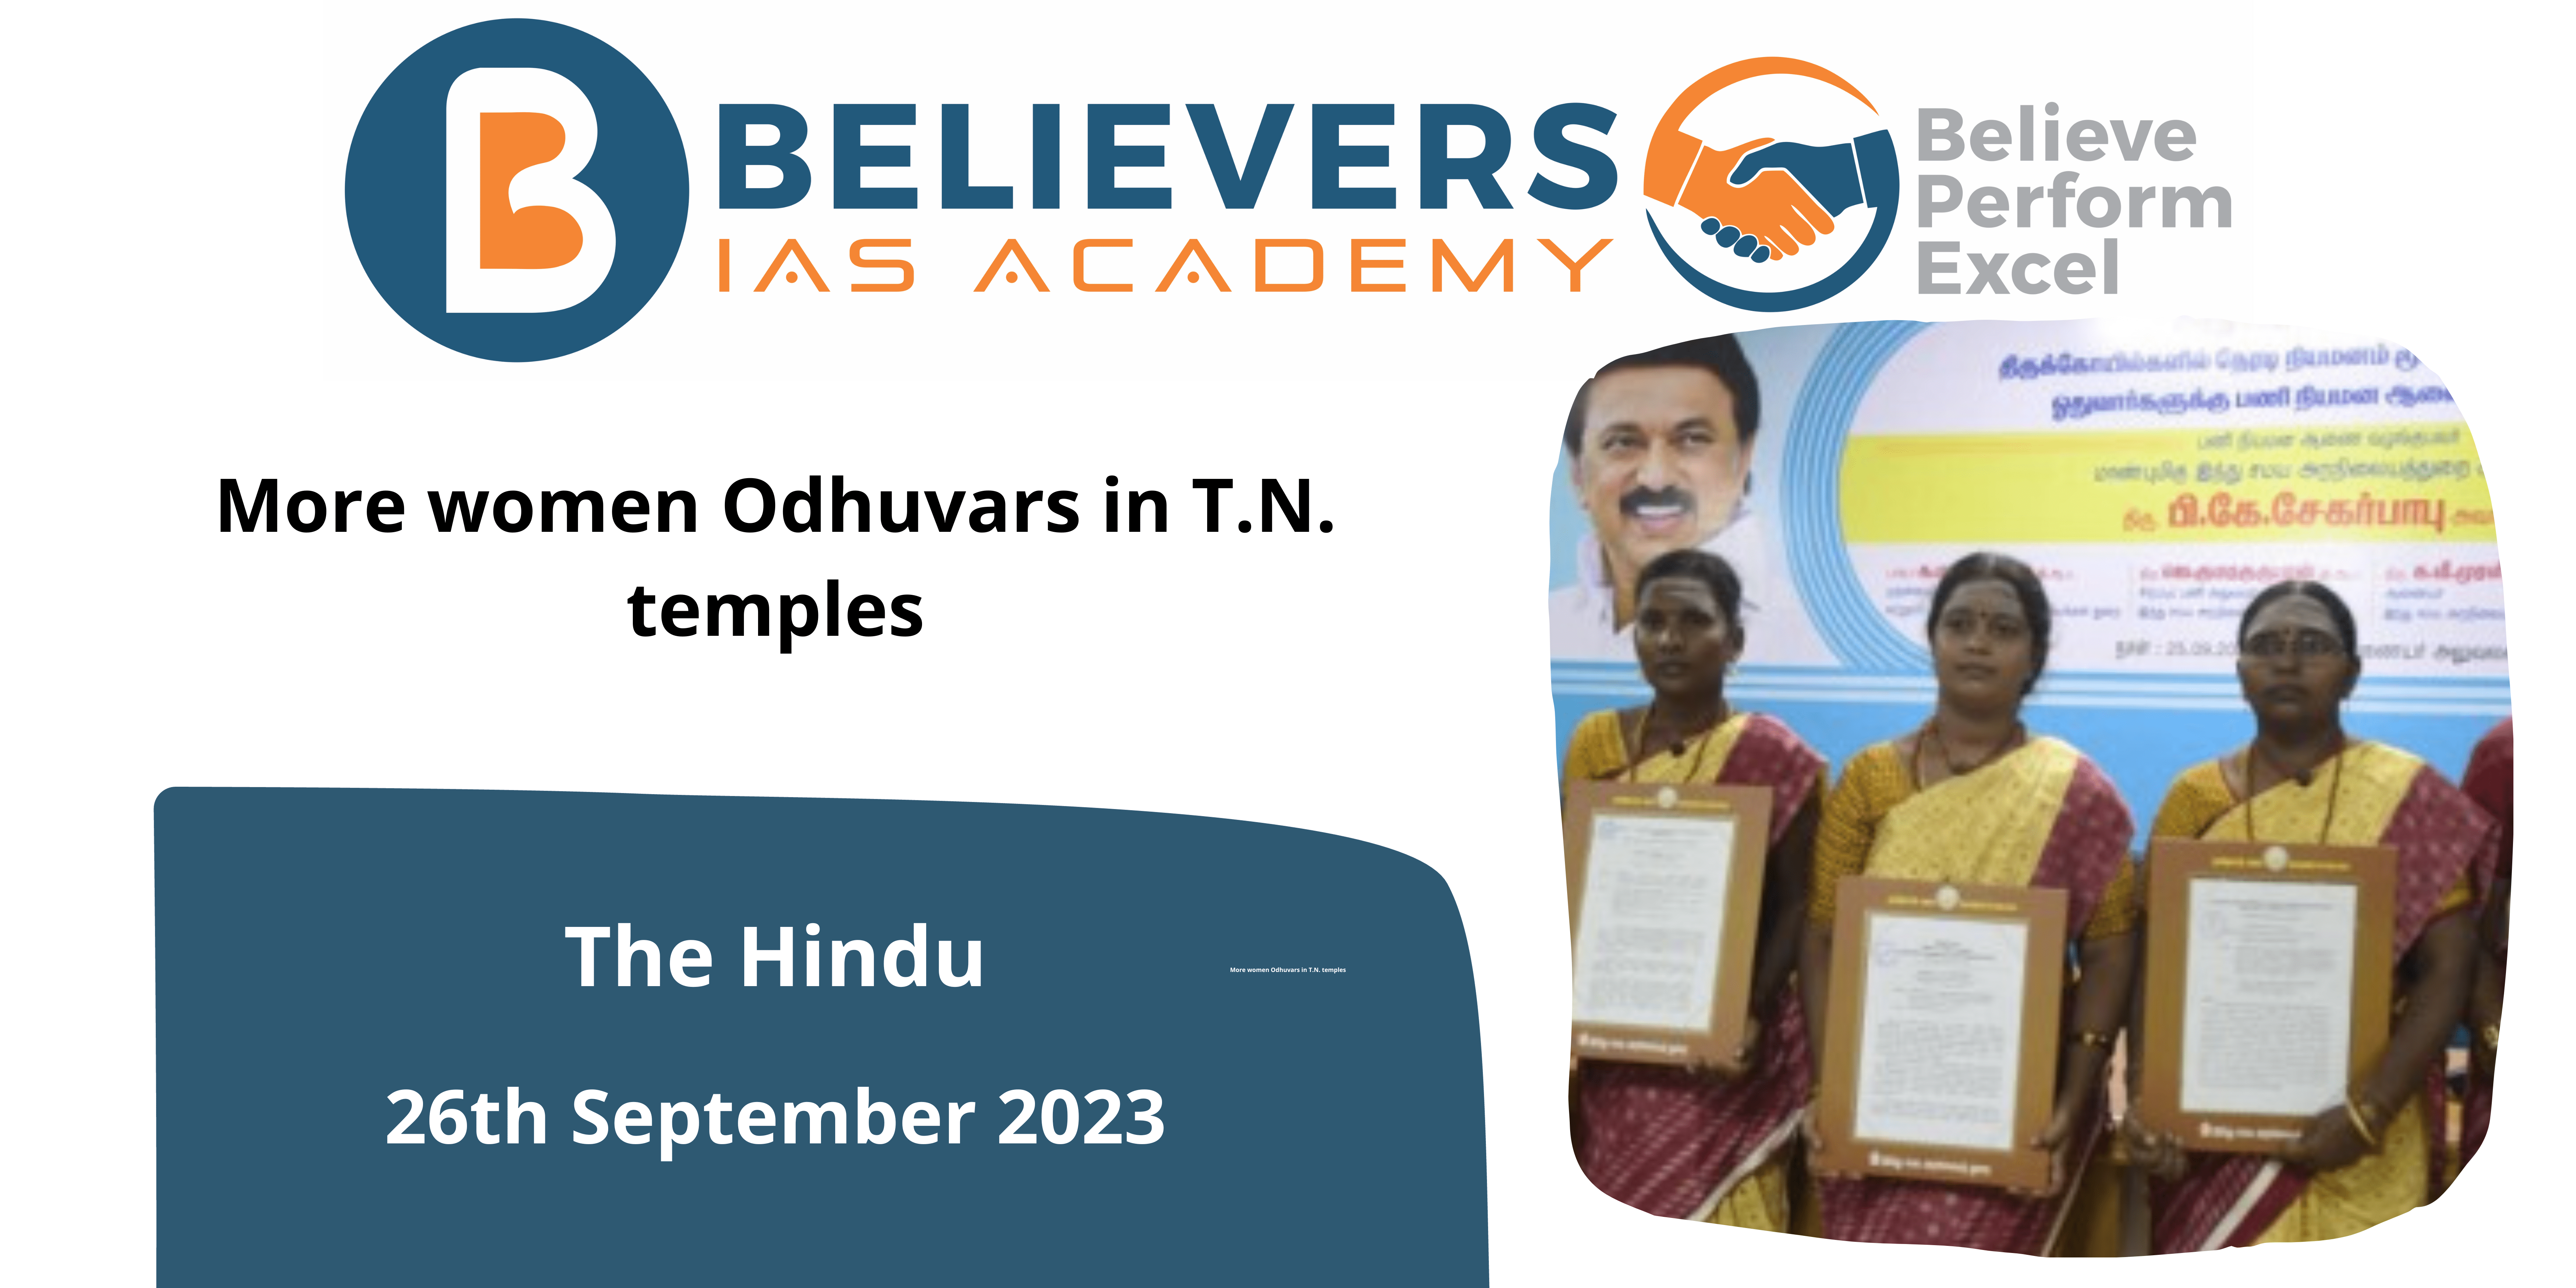 More women Odhuvars in T.N. temples